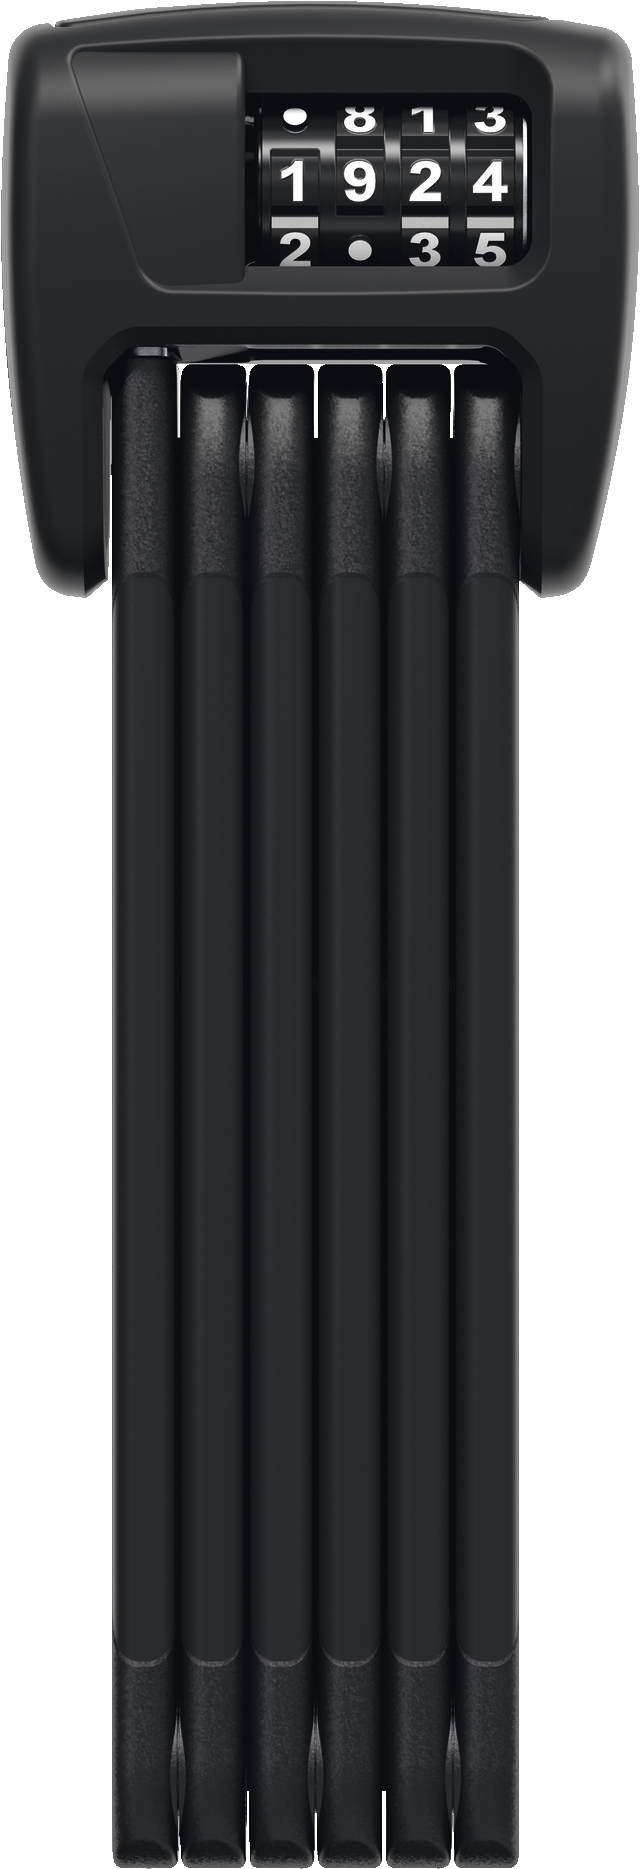 Antifurto pieghevole - BORDO™ 6000C LED